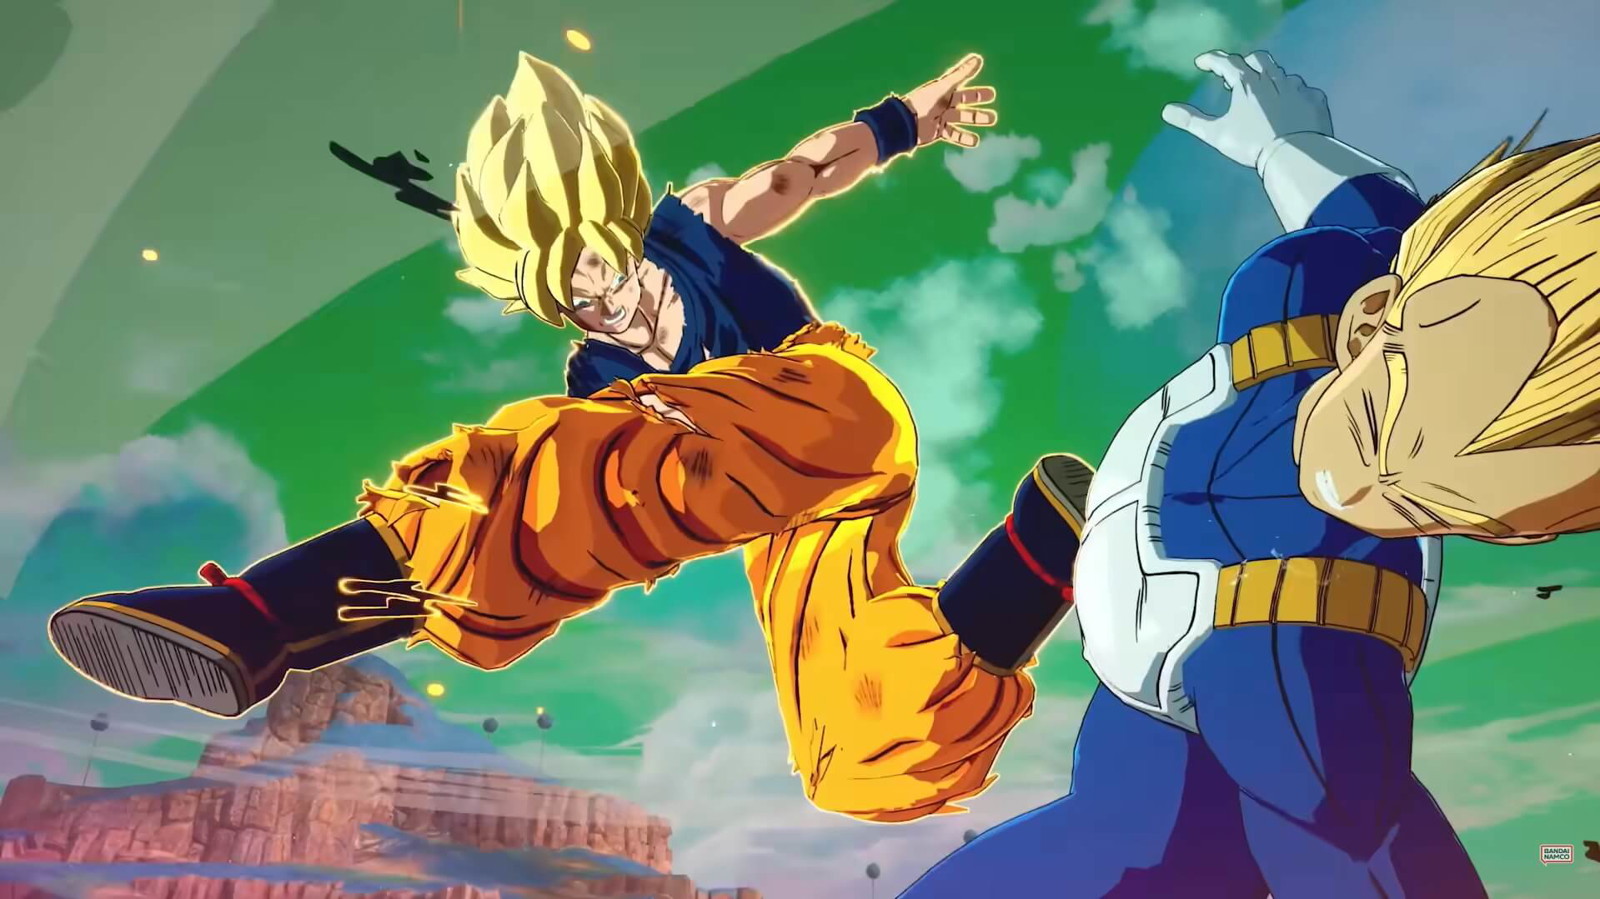 Goku kicks Vegeta away in Dragon Ball: Sparking Zero. Credits: Bandai Namco